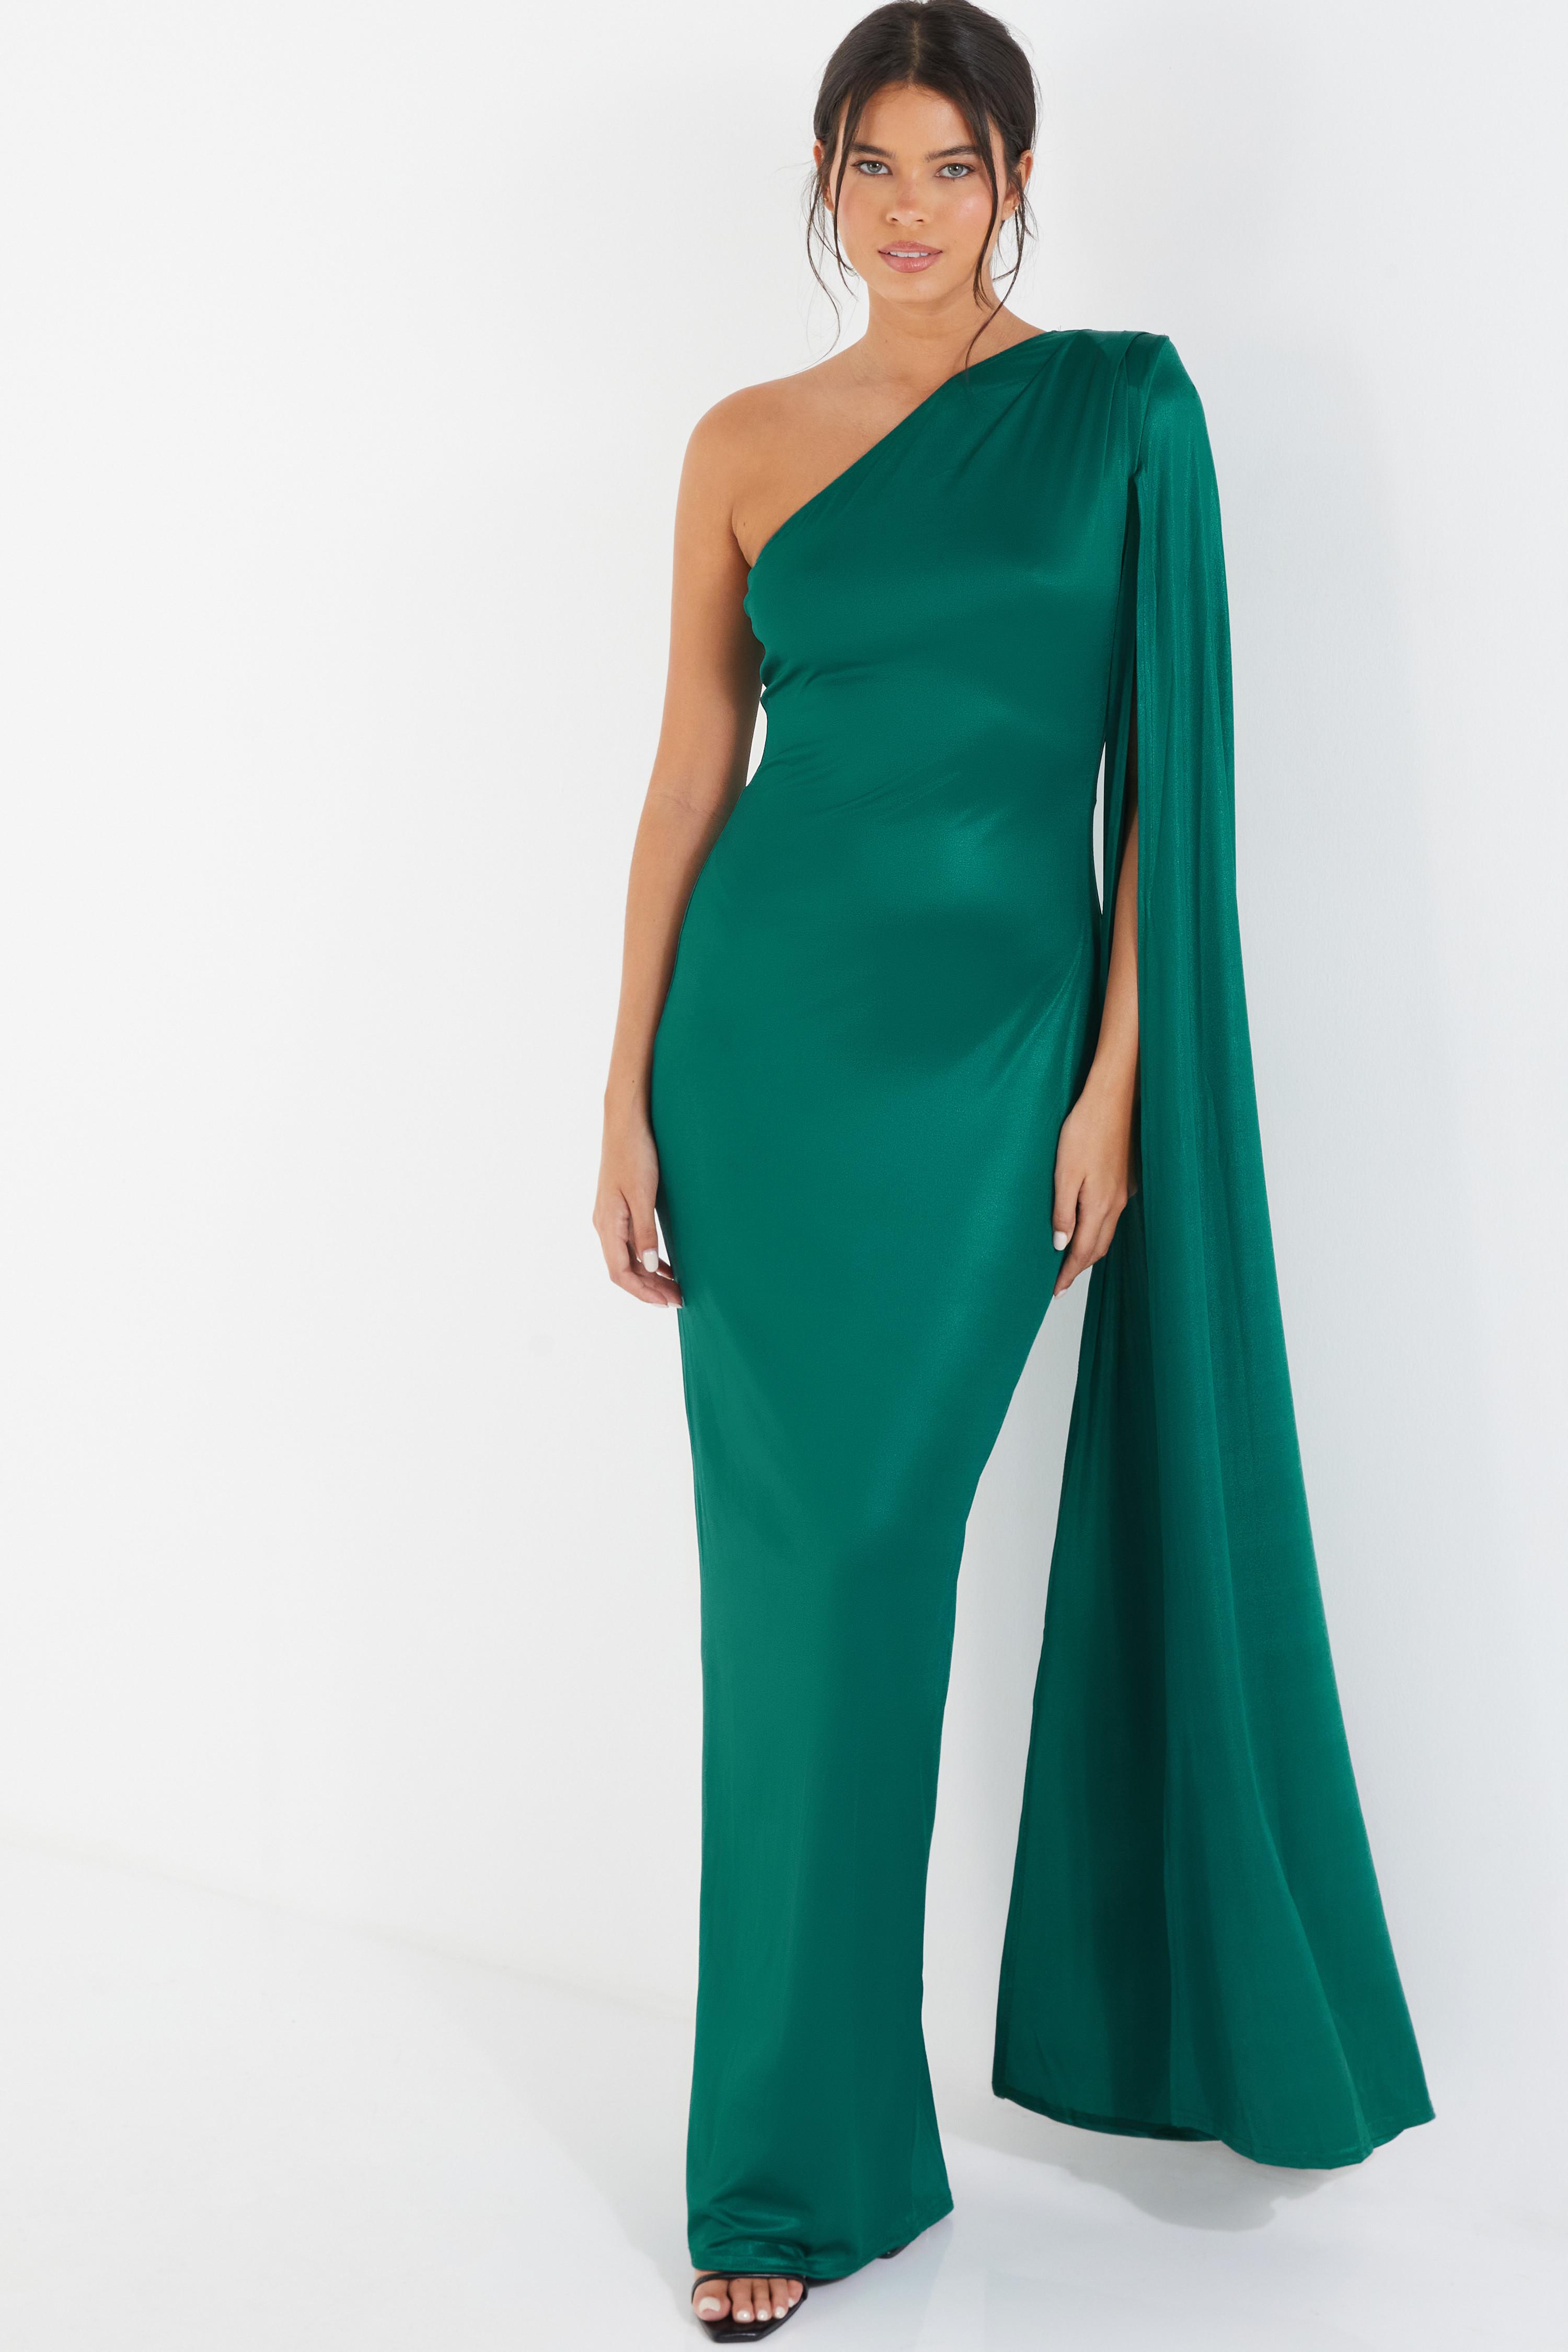 💚 Wearing drape maxi dress from @vkfashion2018 . Isn't this green